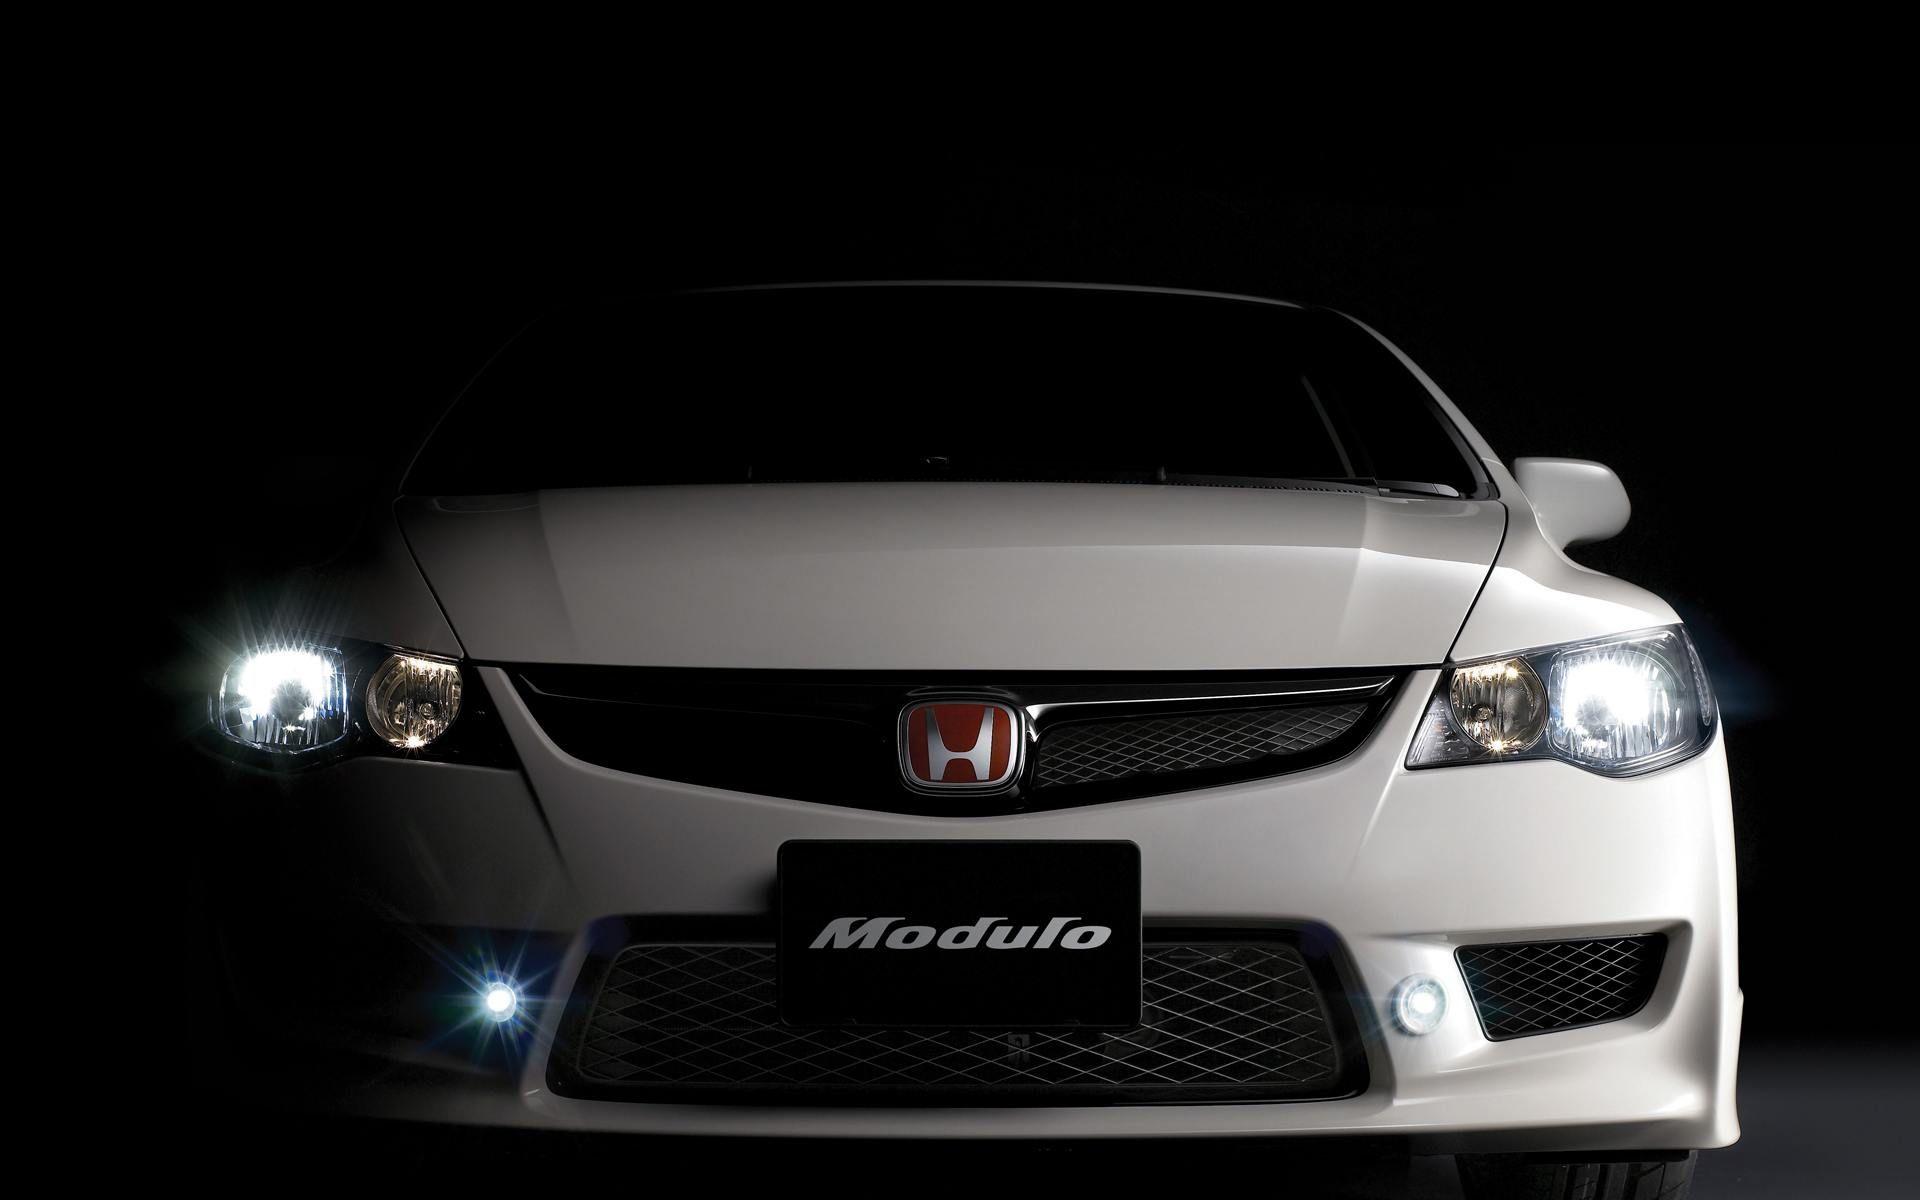 Honda Civic Wallpaper and Background Image